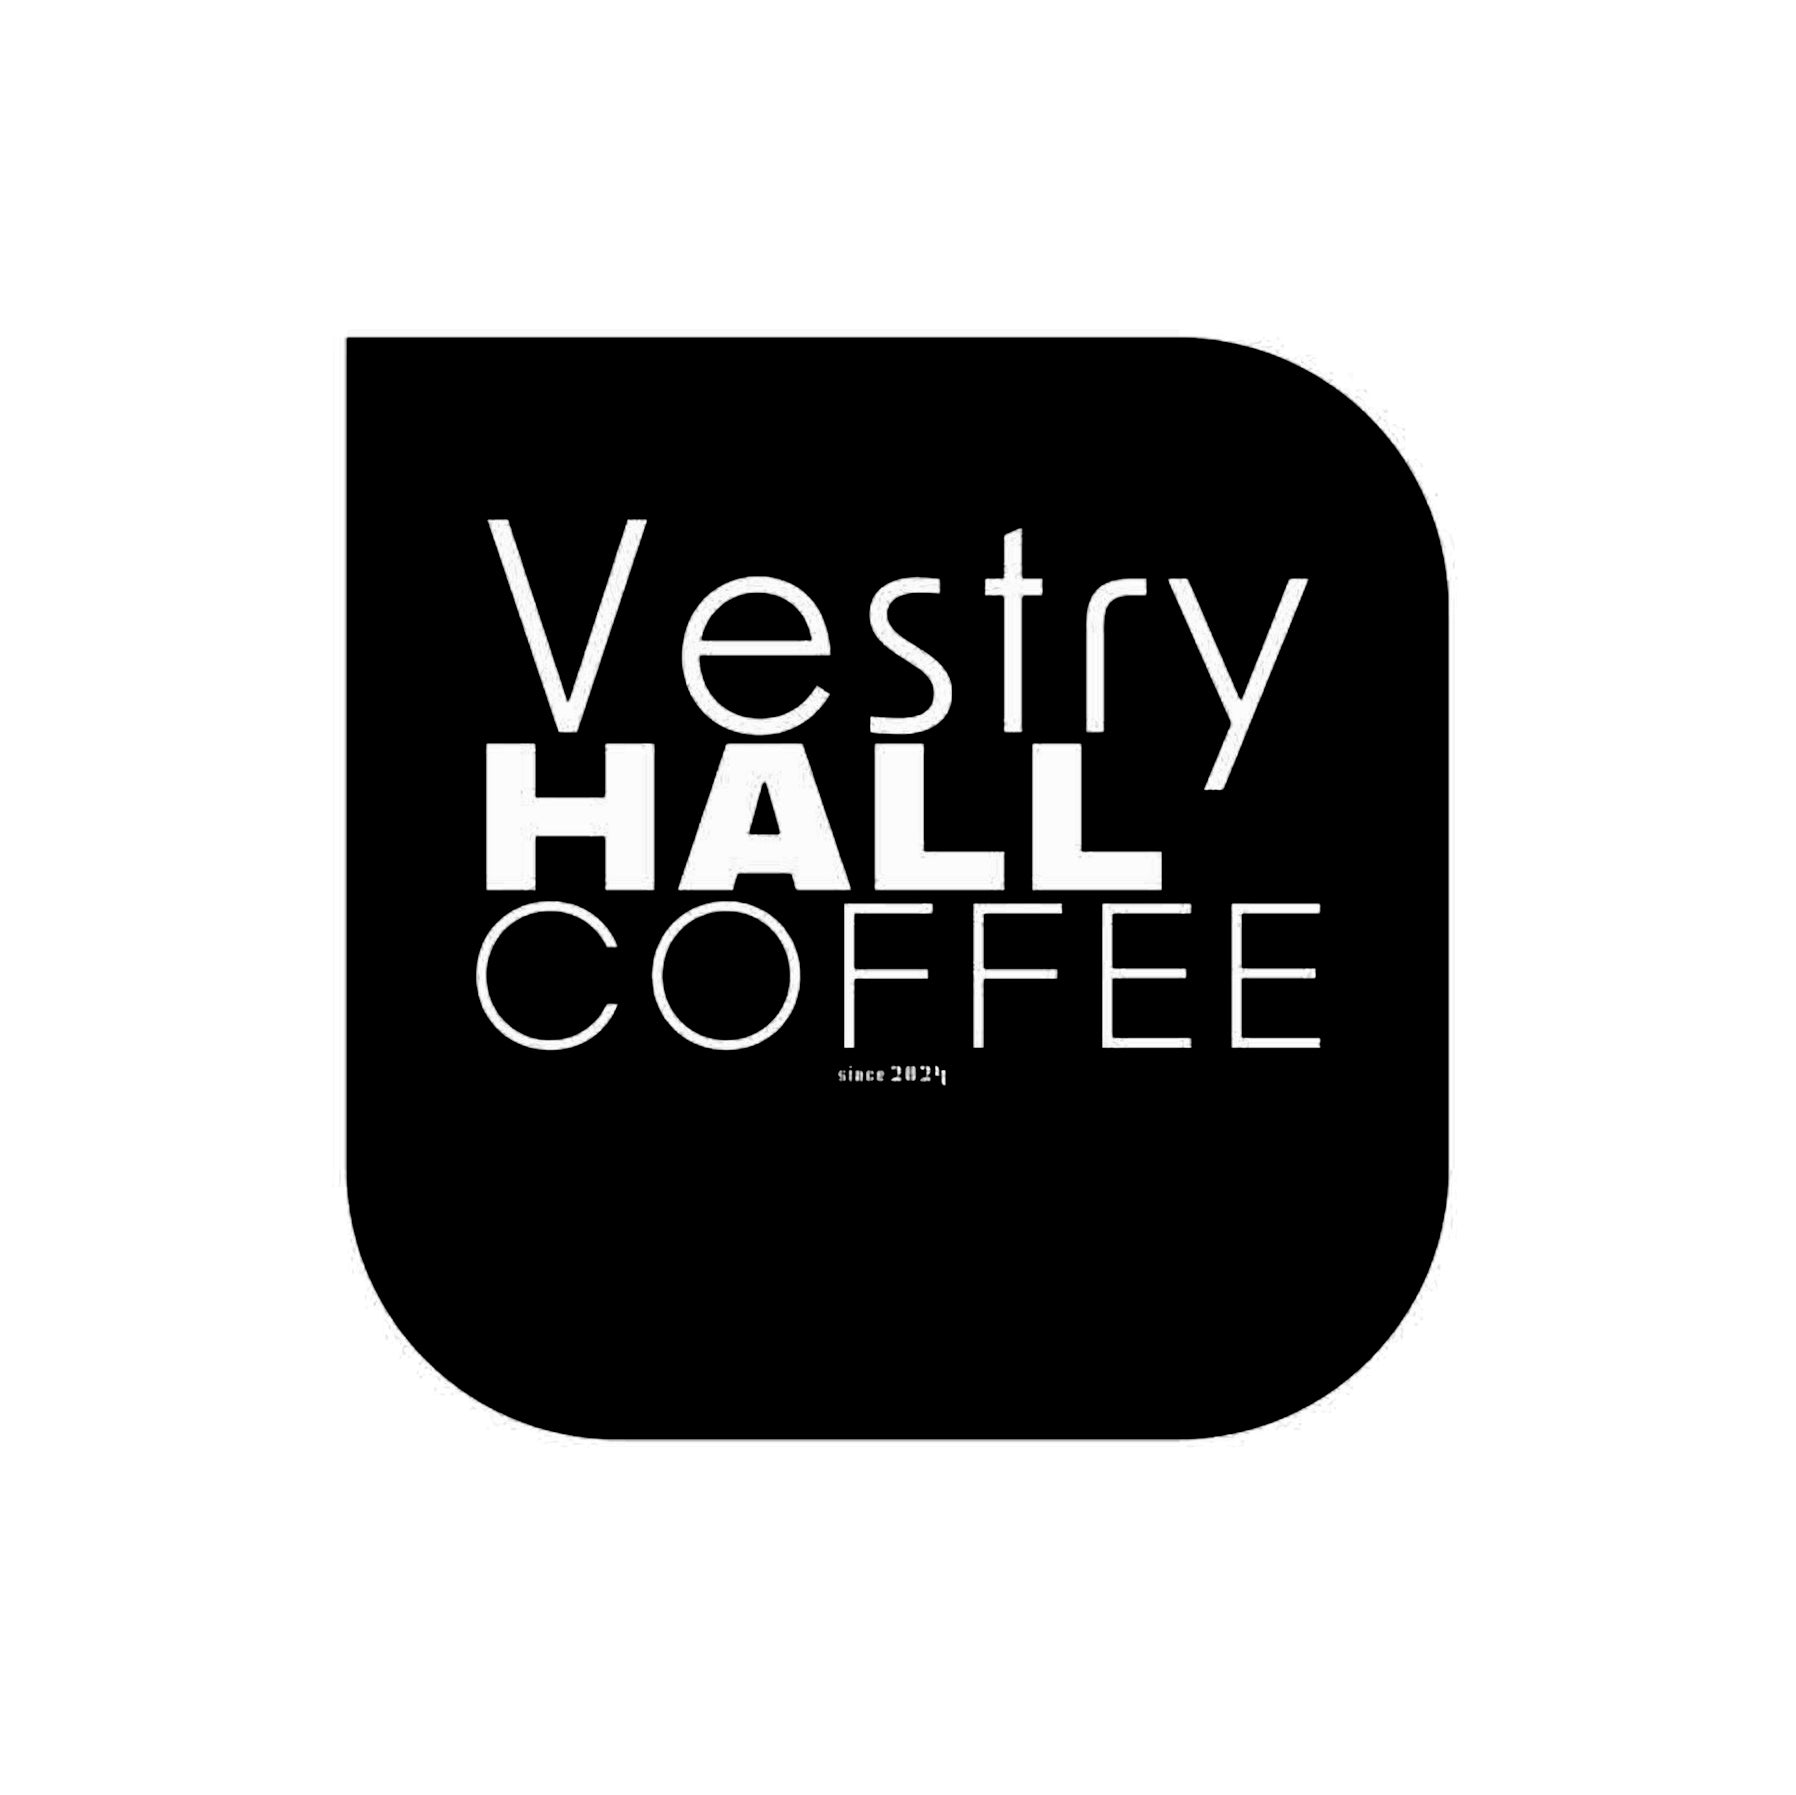 Vestry hall coffee